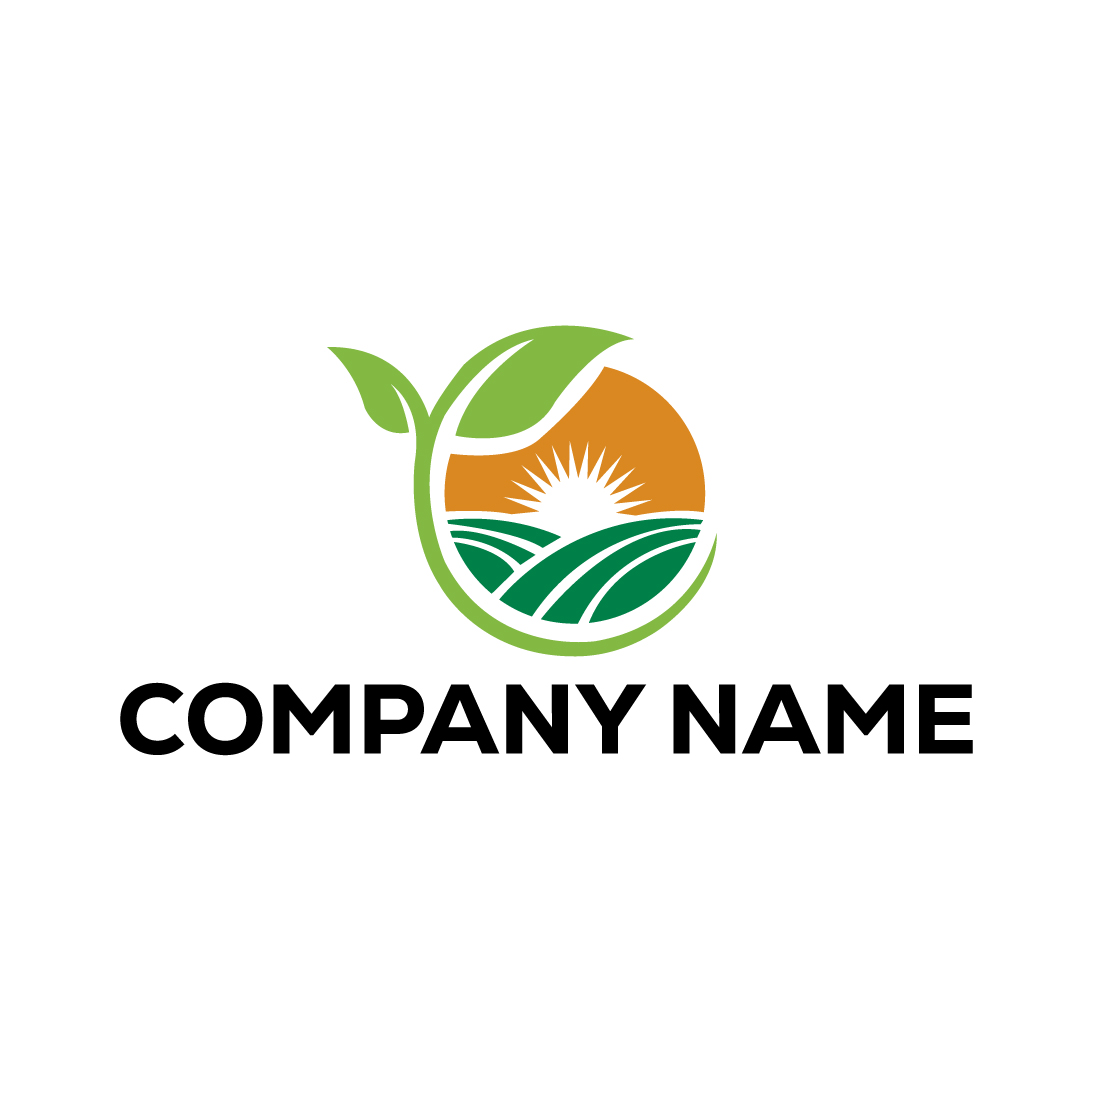 Farm Logo, Agriculture Logo, Farm design, Farm business, Farm icon cover image.